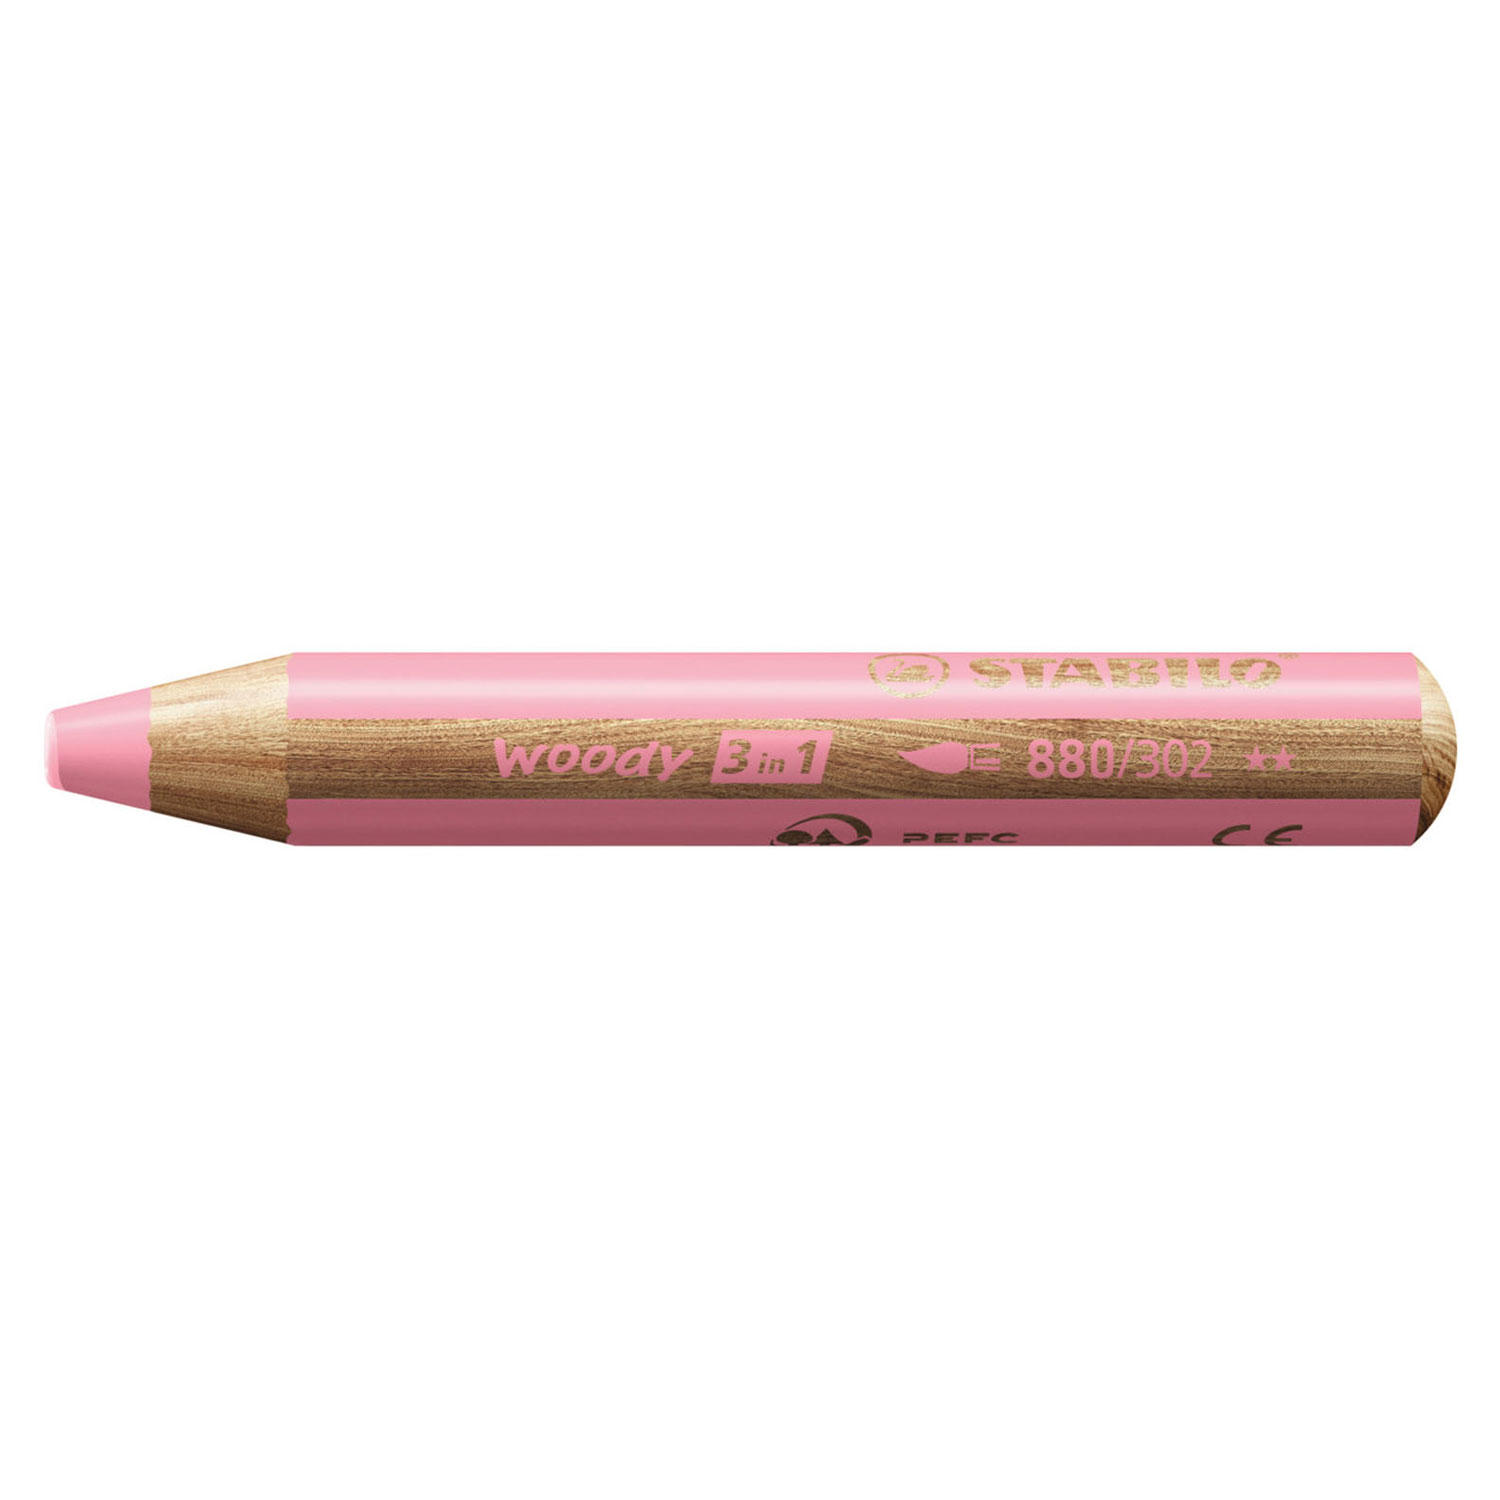 STABILO woody 3 en 1 - Crayon de couleur multi-talents - Rose pastel